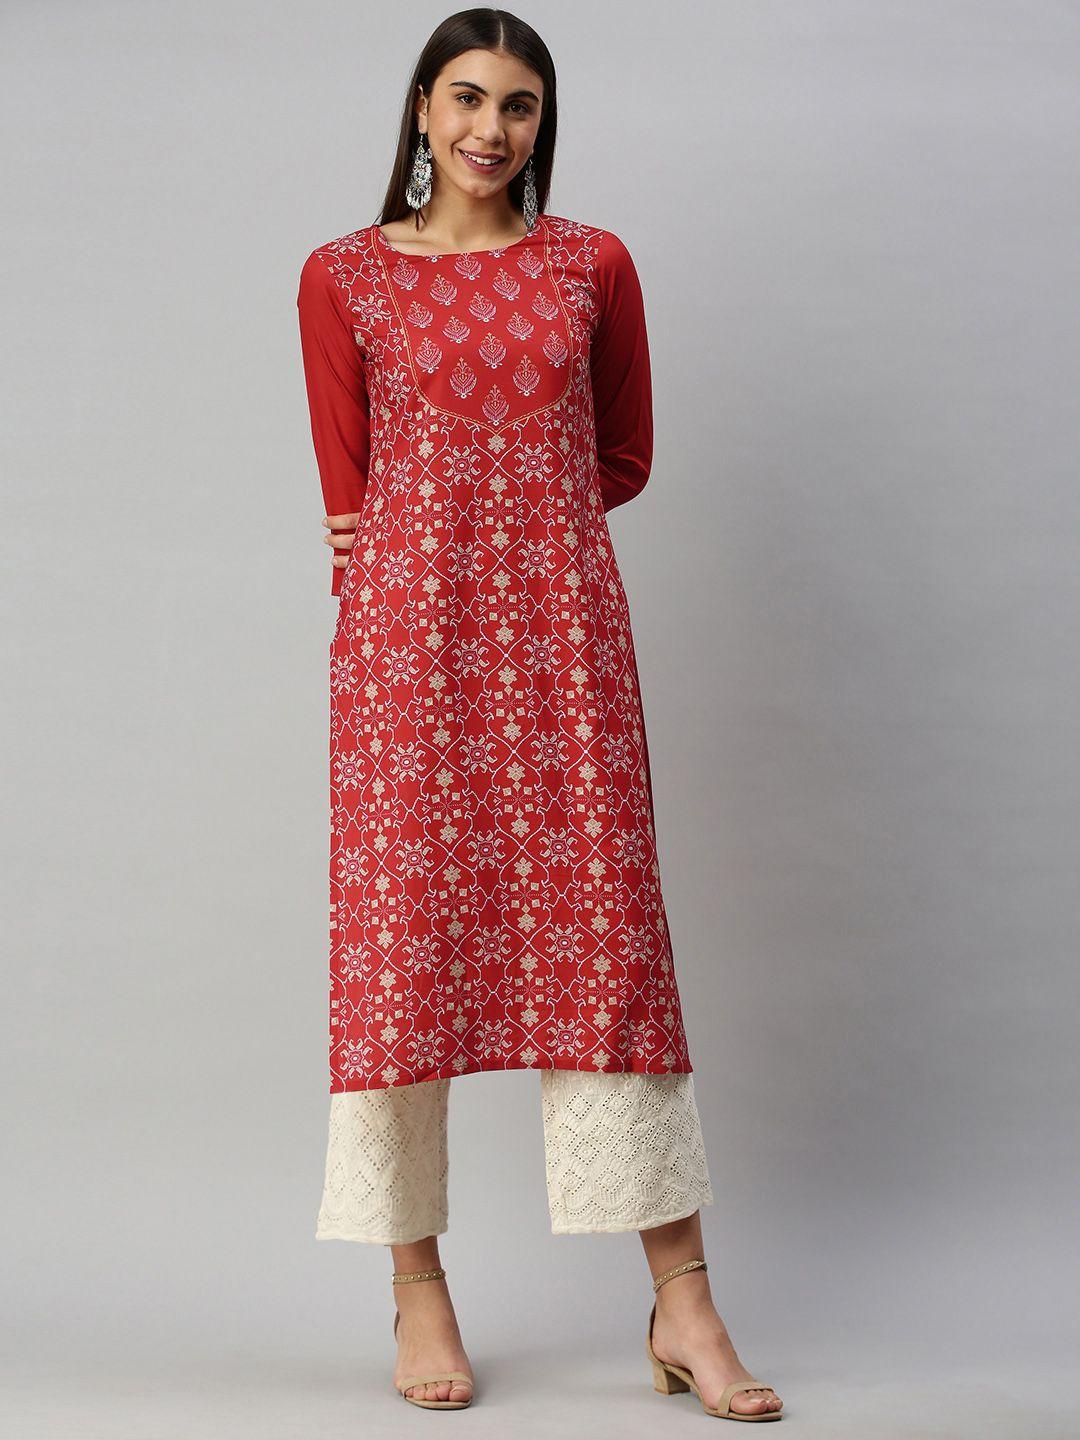 ahika women red & off white floral printed kurta